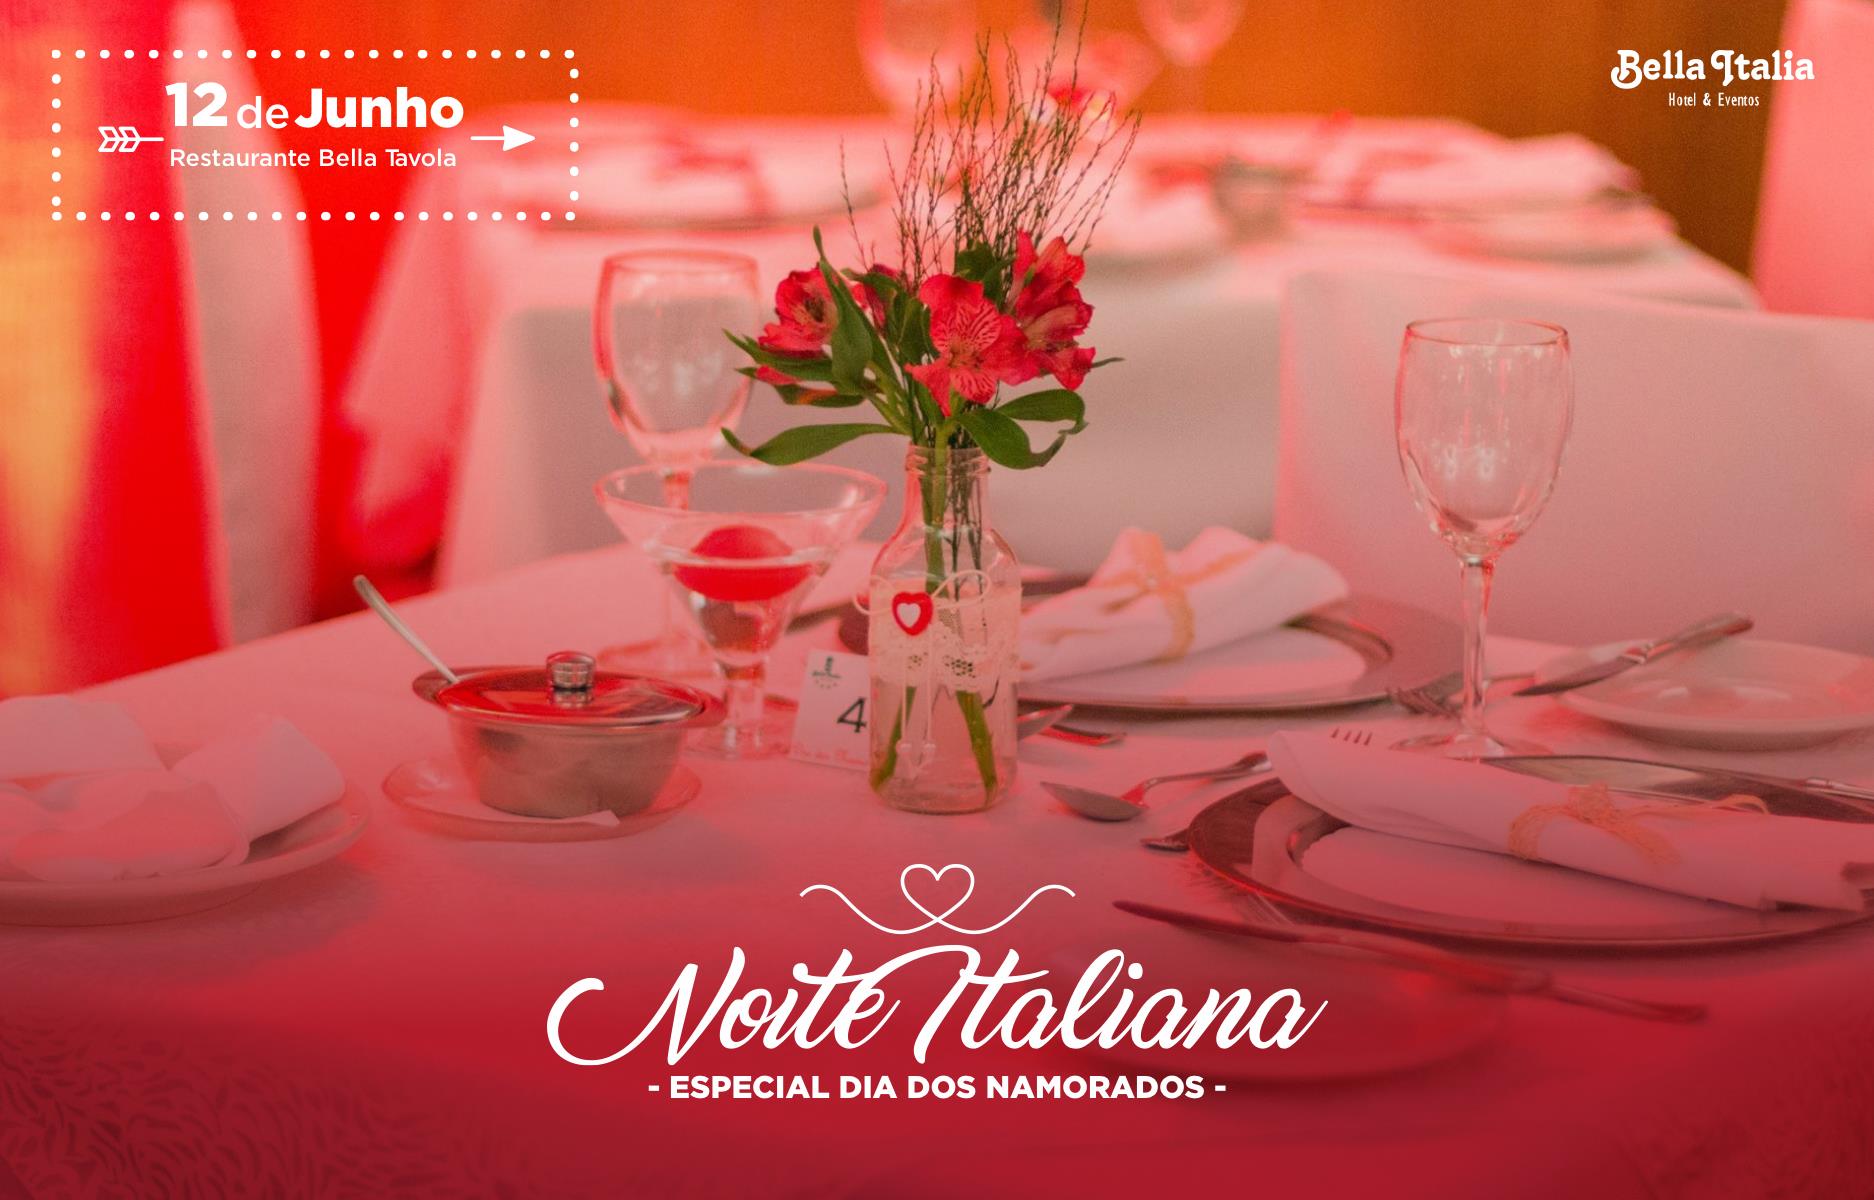 Hotel Bella Italia oferece jantar no Dia dos Namorados 